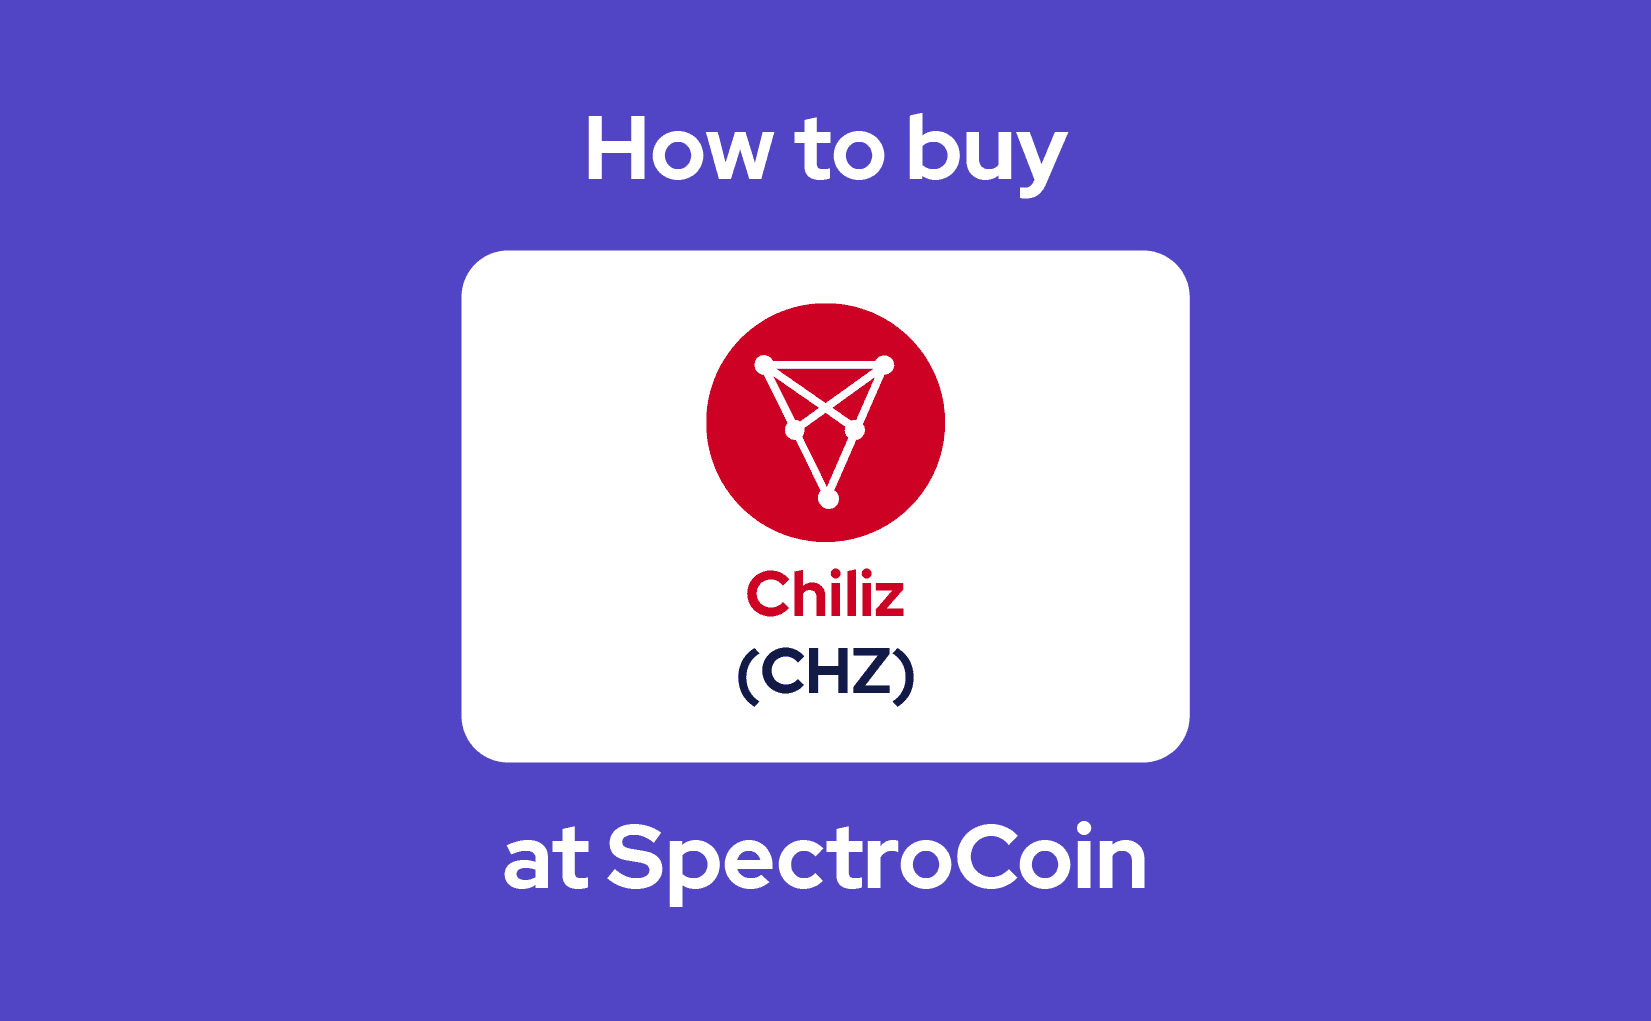 How to buy Chiliz (CHZ)?